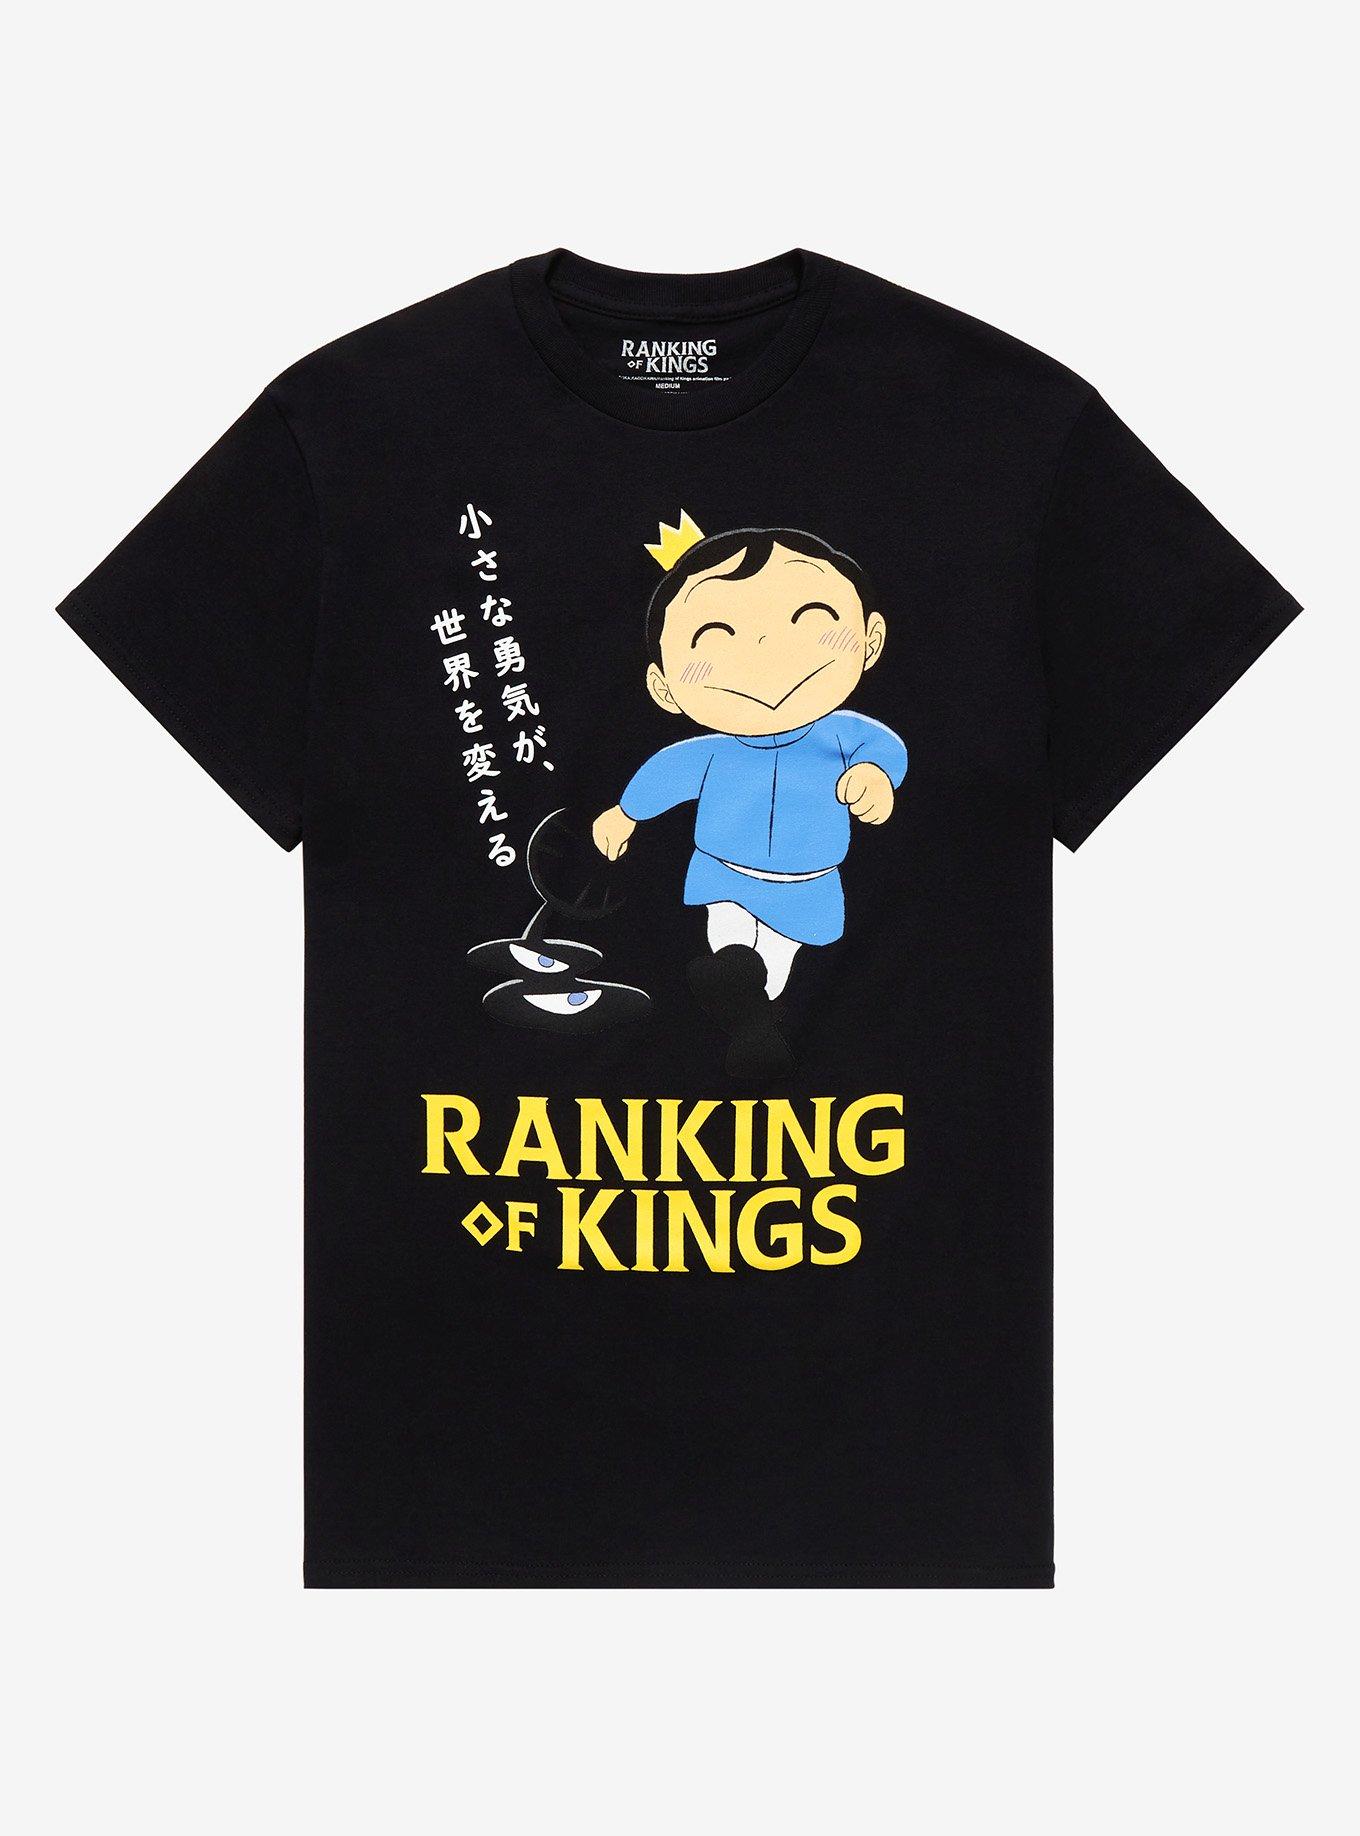 Bojji and Hunter King Adventure Anime Manga Ranking of Kings 